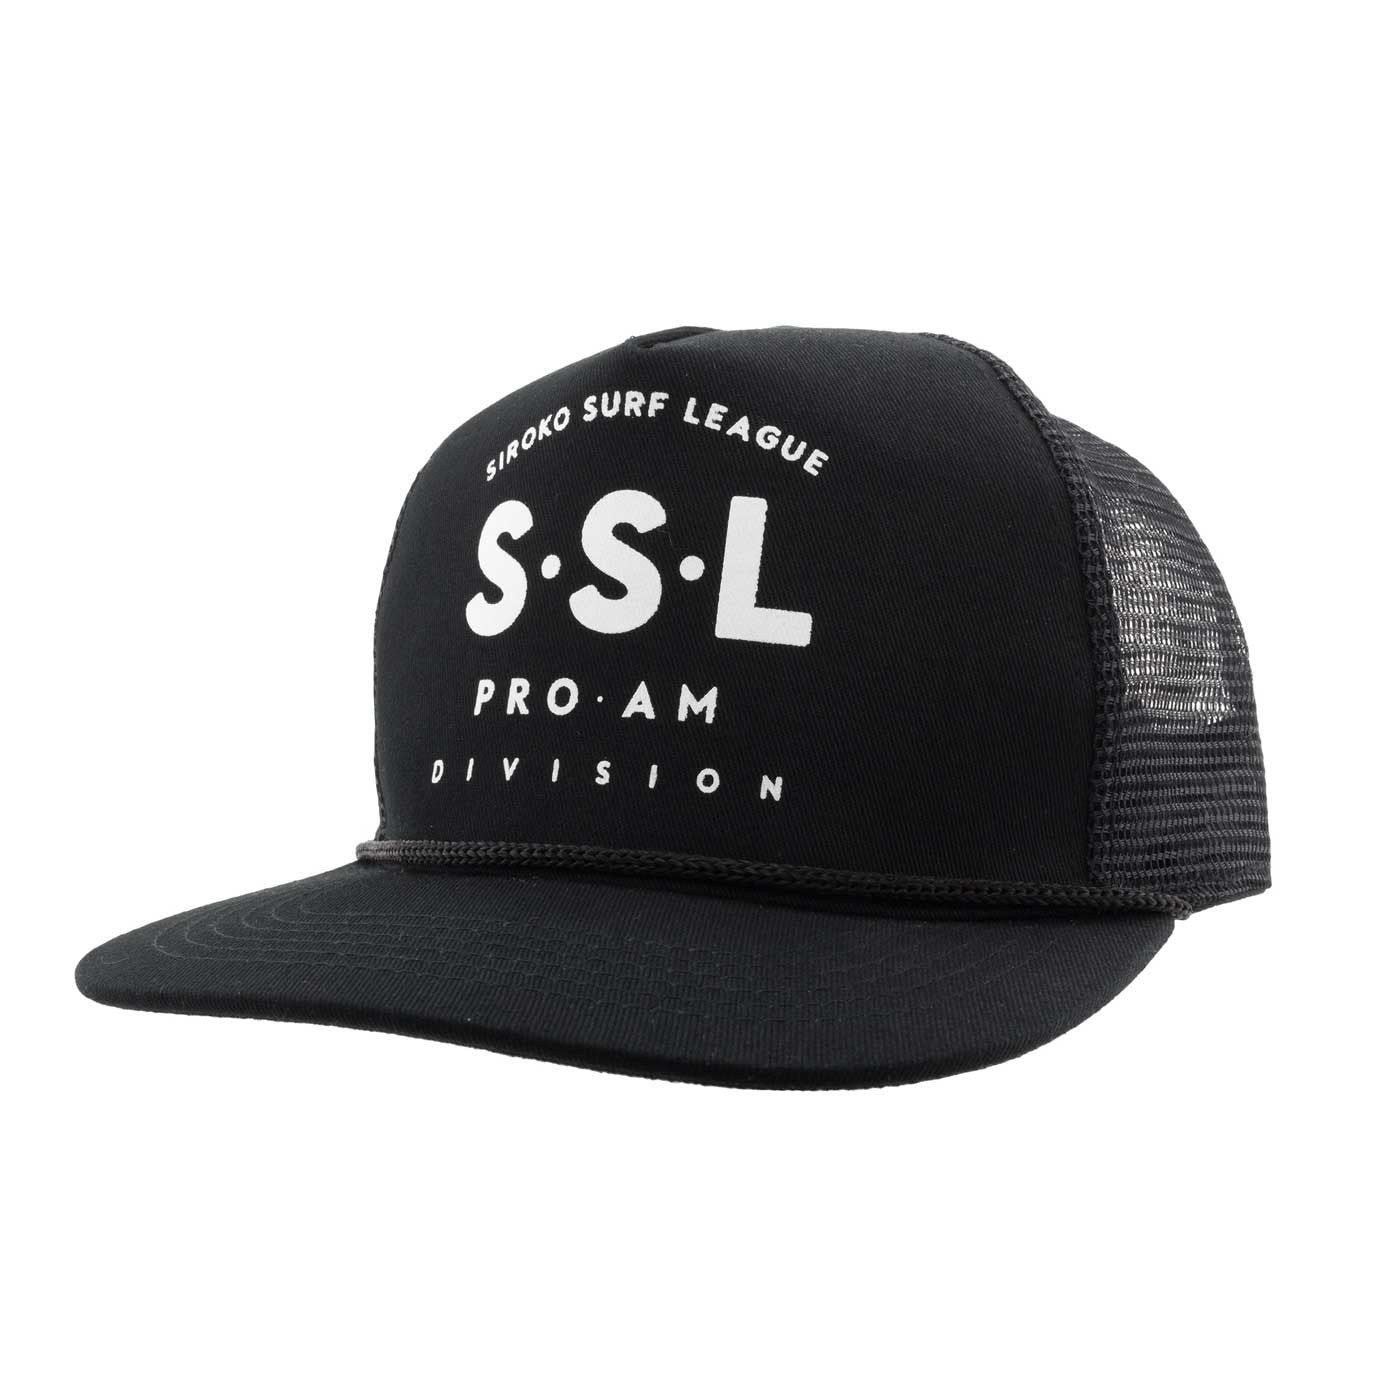 Officiële trucker-stijl cap SSL